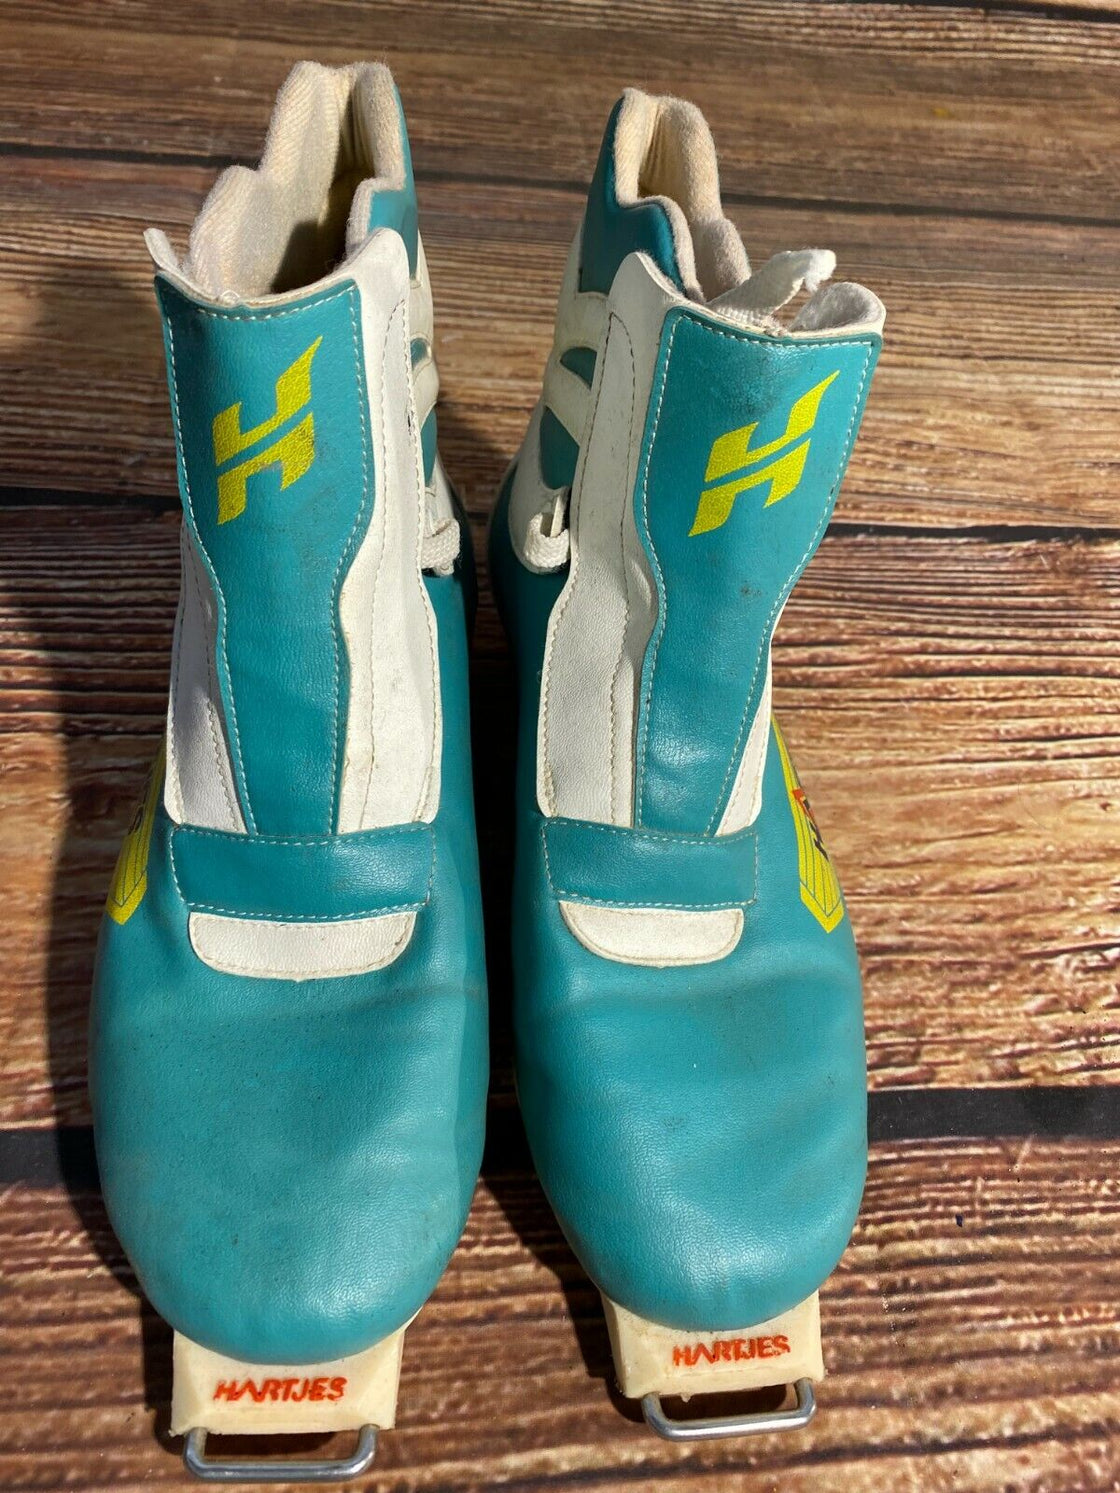 HARTJES Vintage Nordic Cross Country Ski Boots EU42, US8.5 SNS Old Bindings